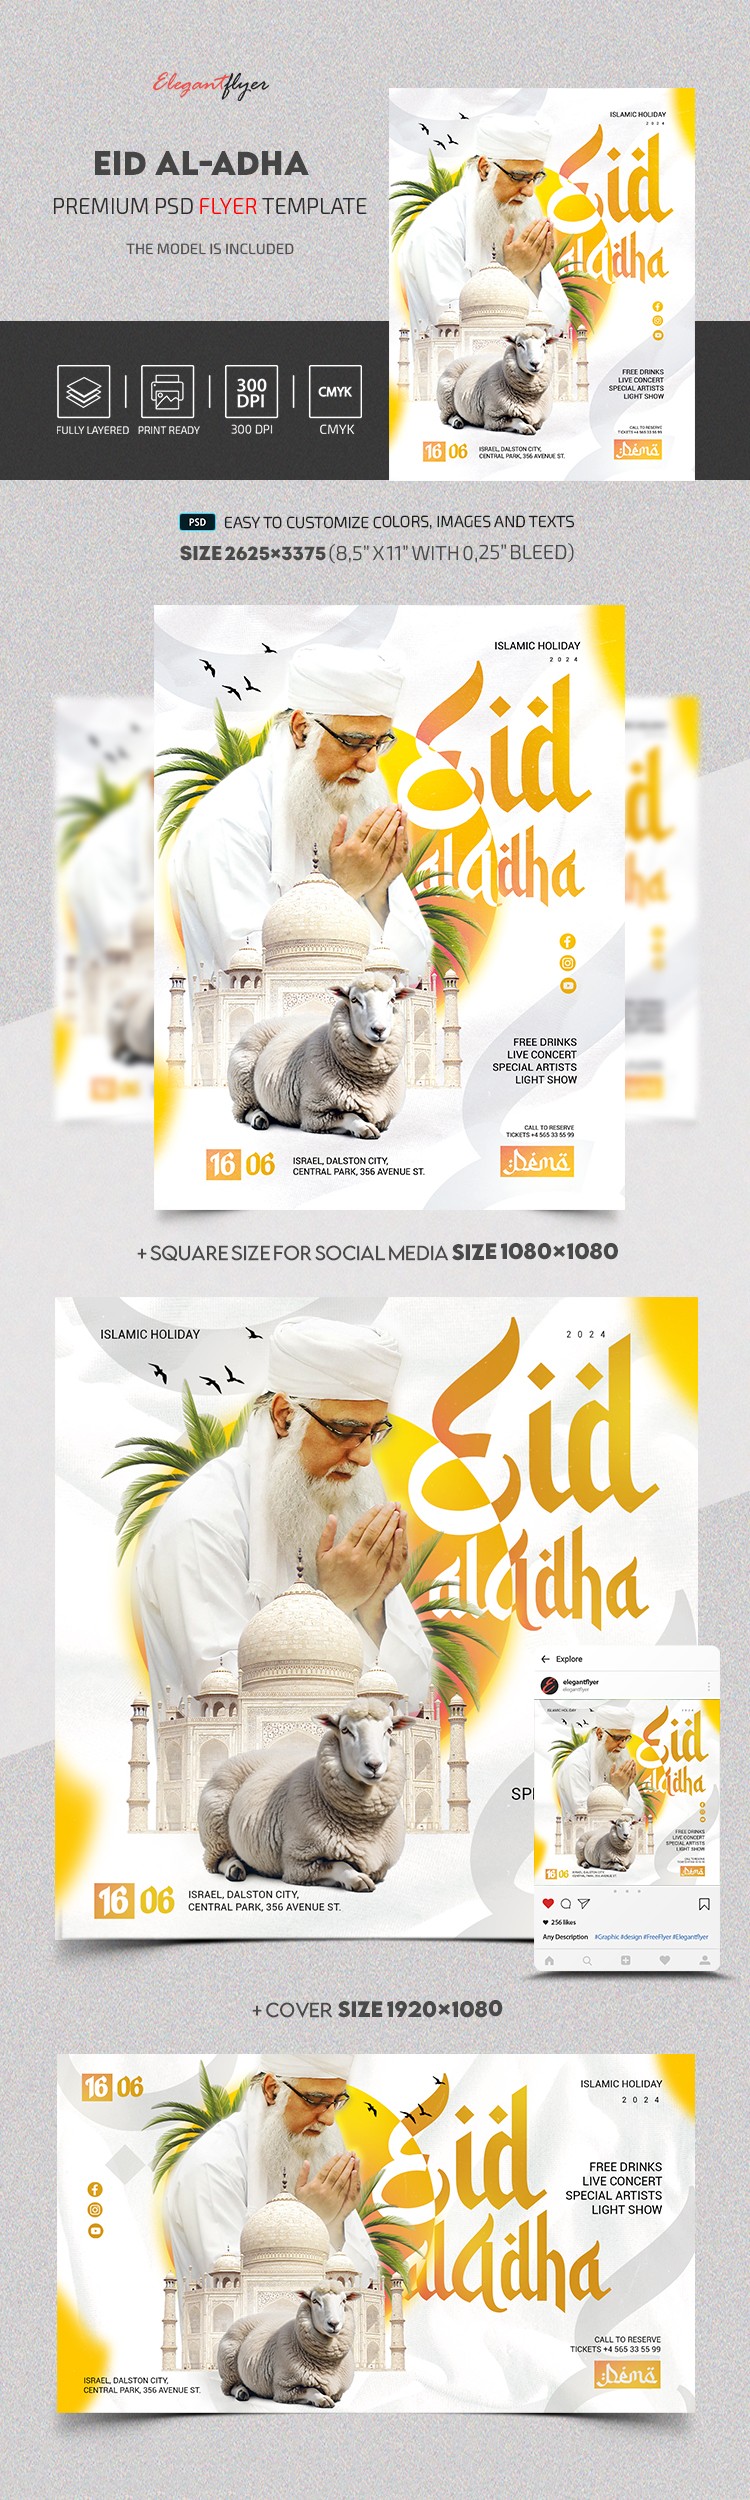 Święto Eid Al Adha by ElegantFlyer